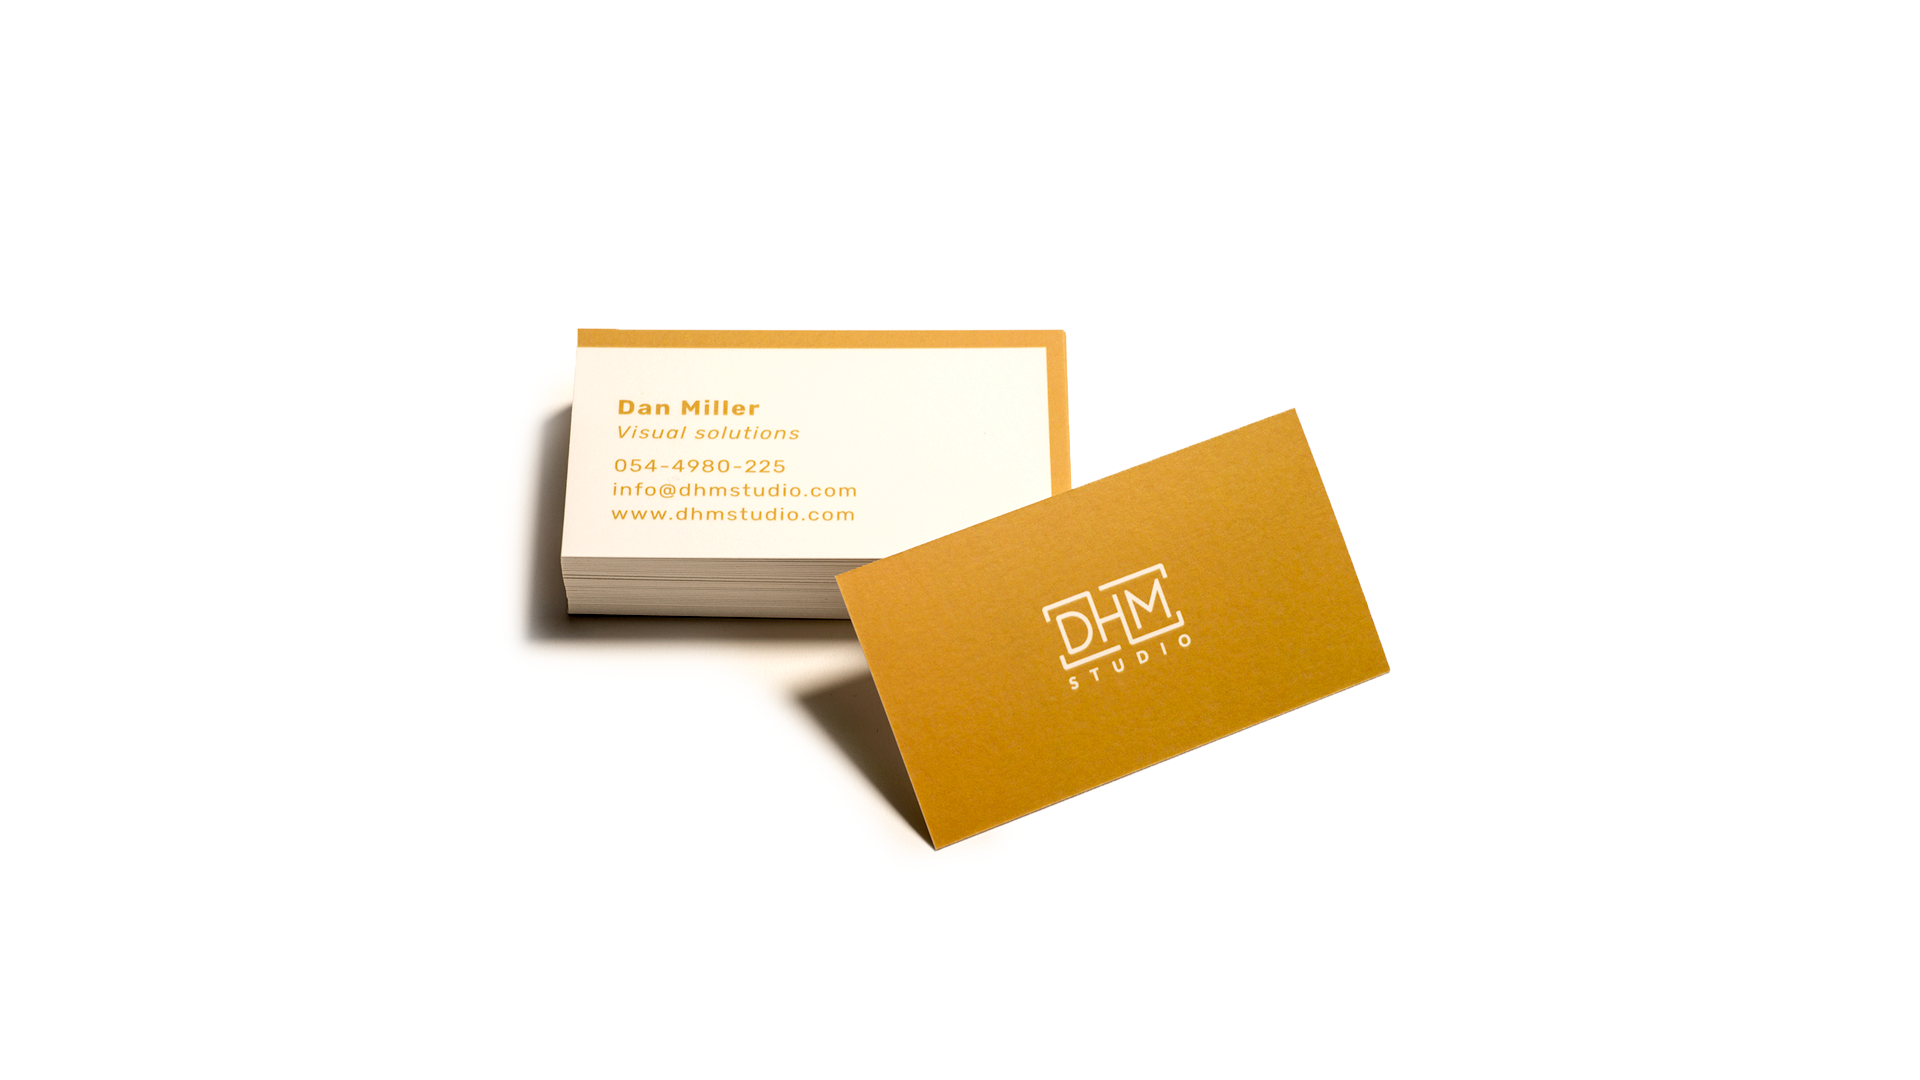 dhm_studio_business_card